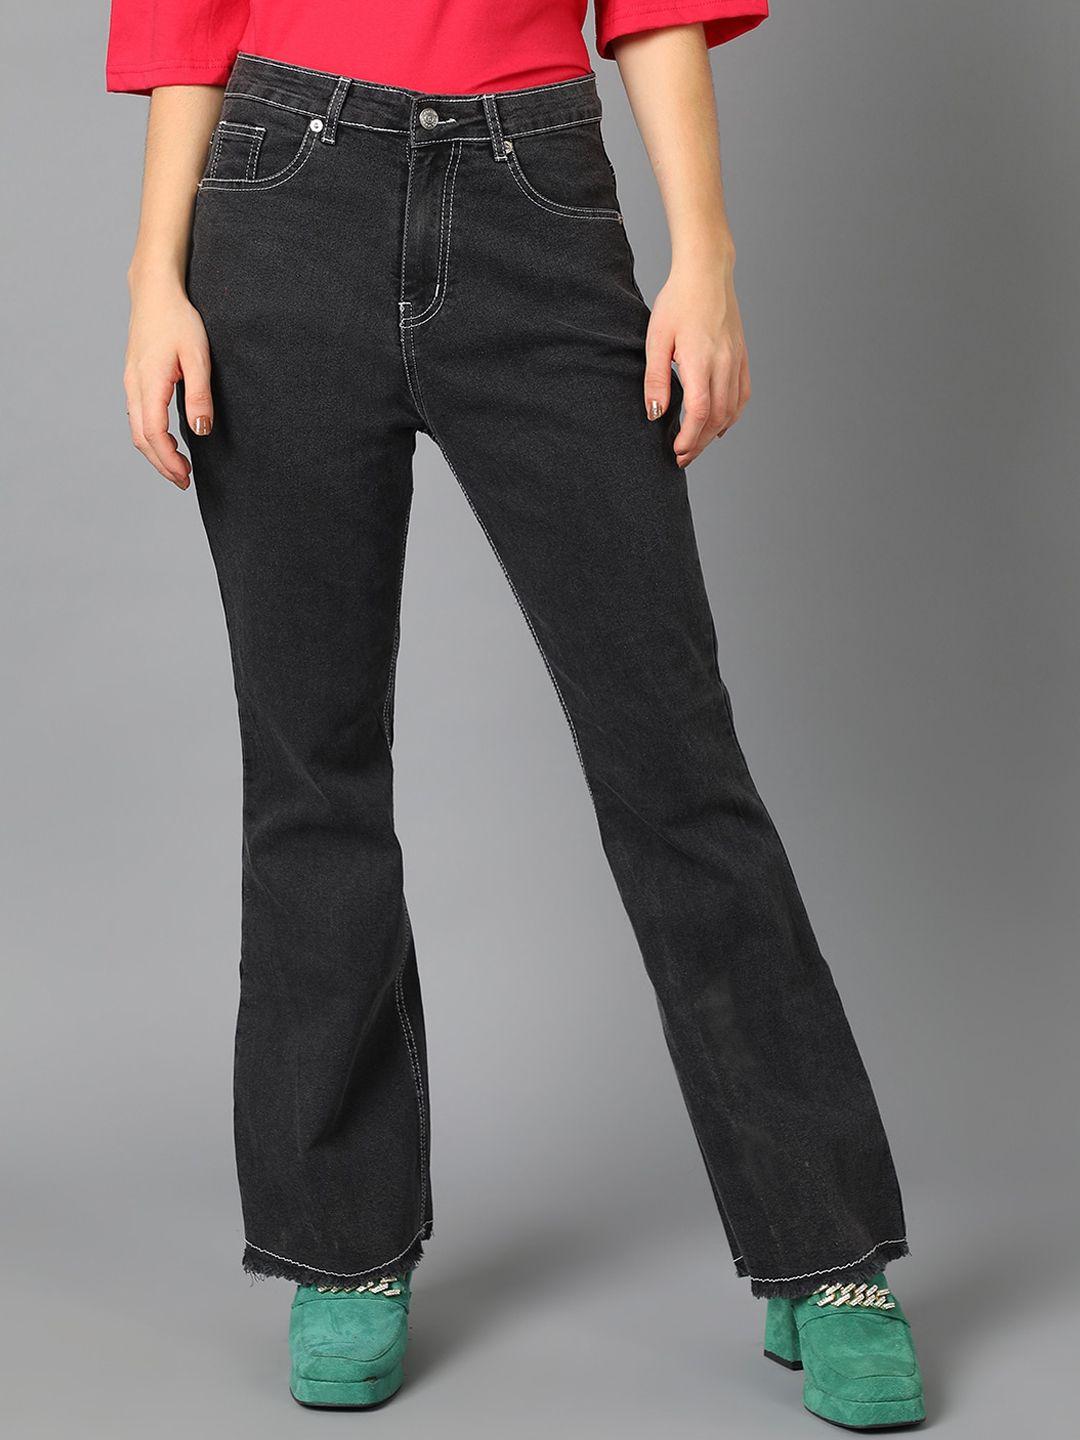 kotty-women-jean-bootcut-high-rise-cotton-stretchable-jeans